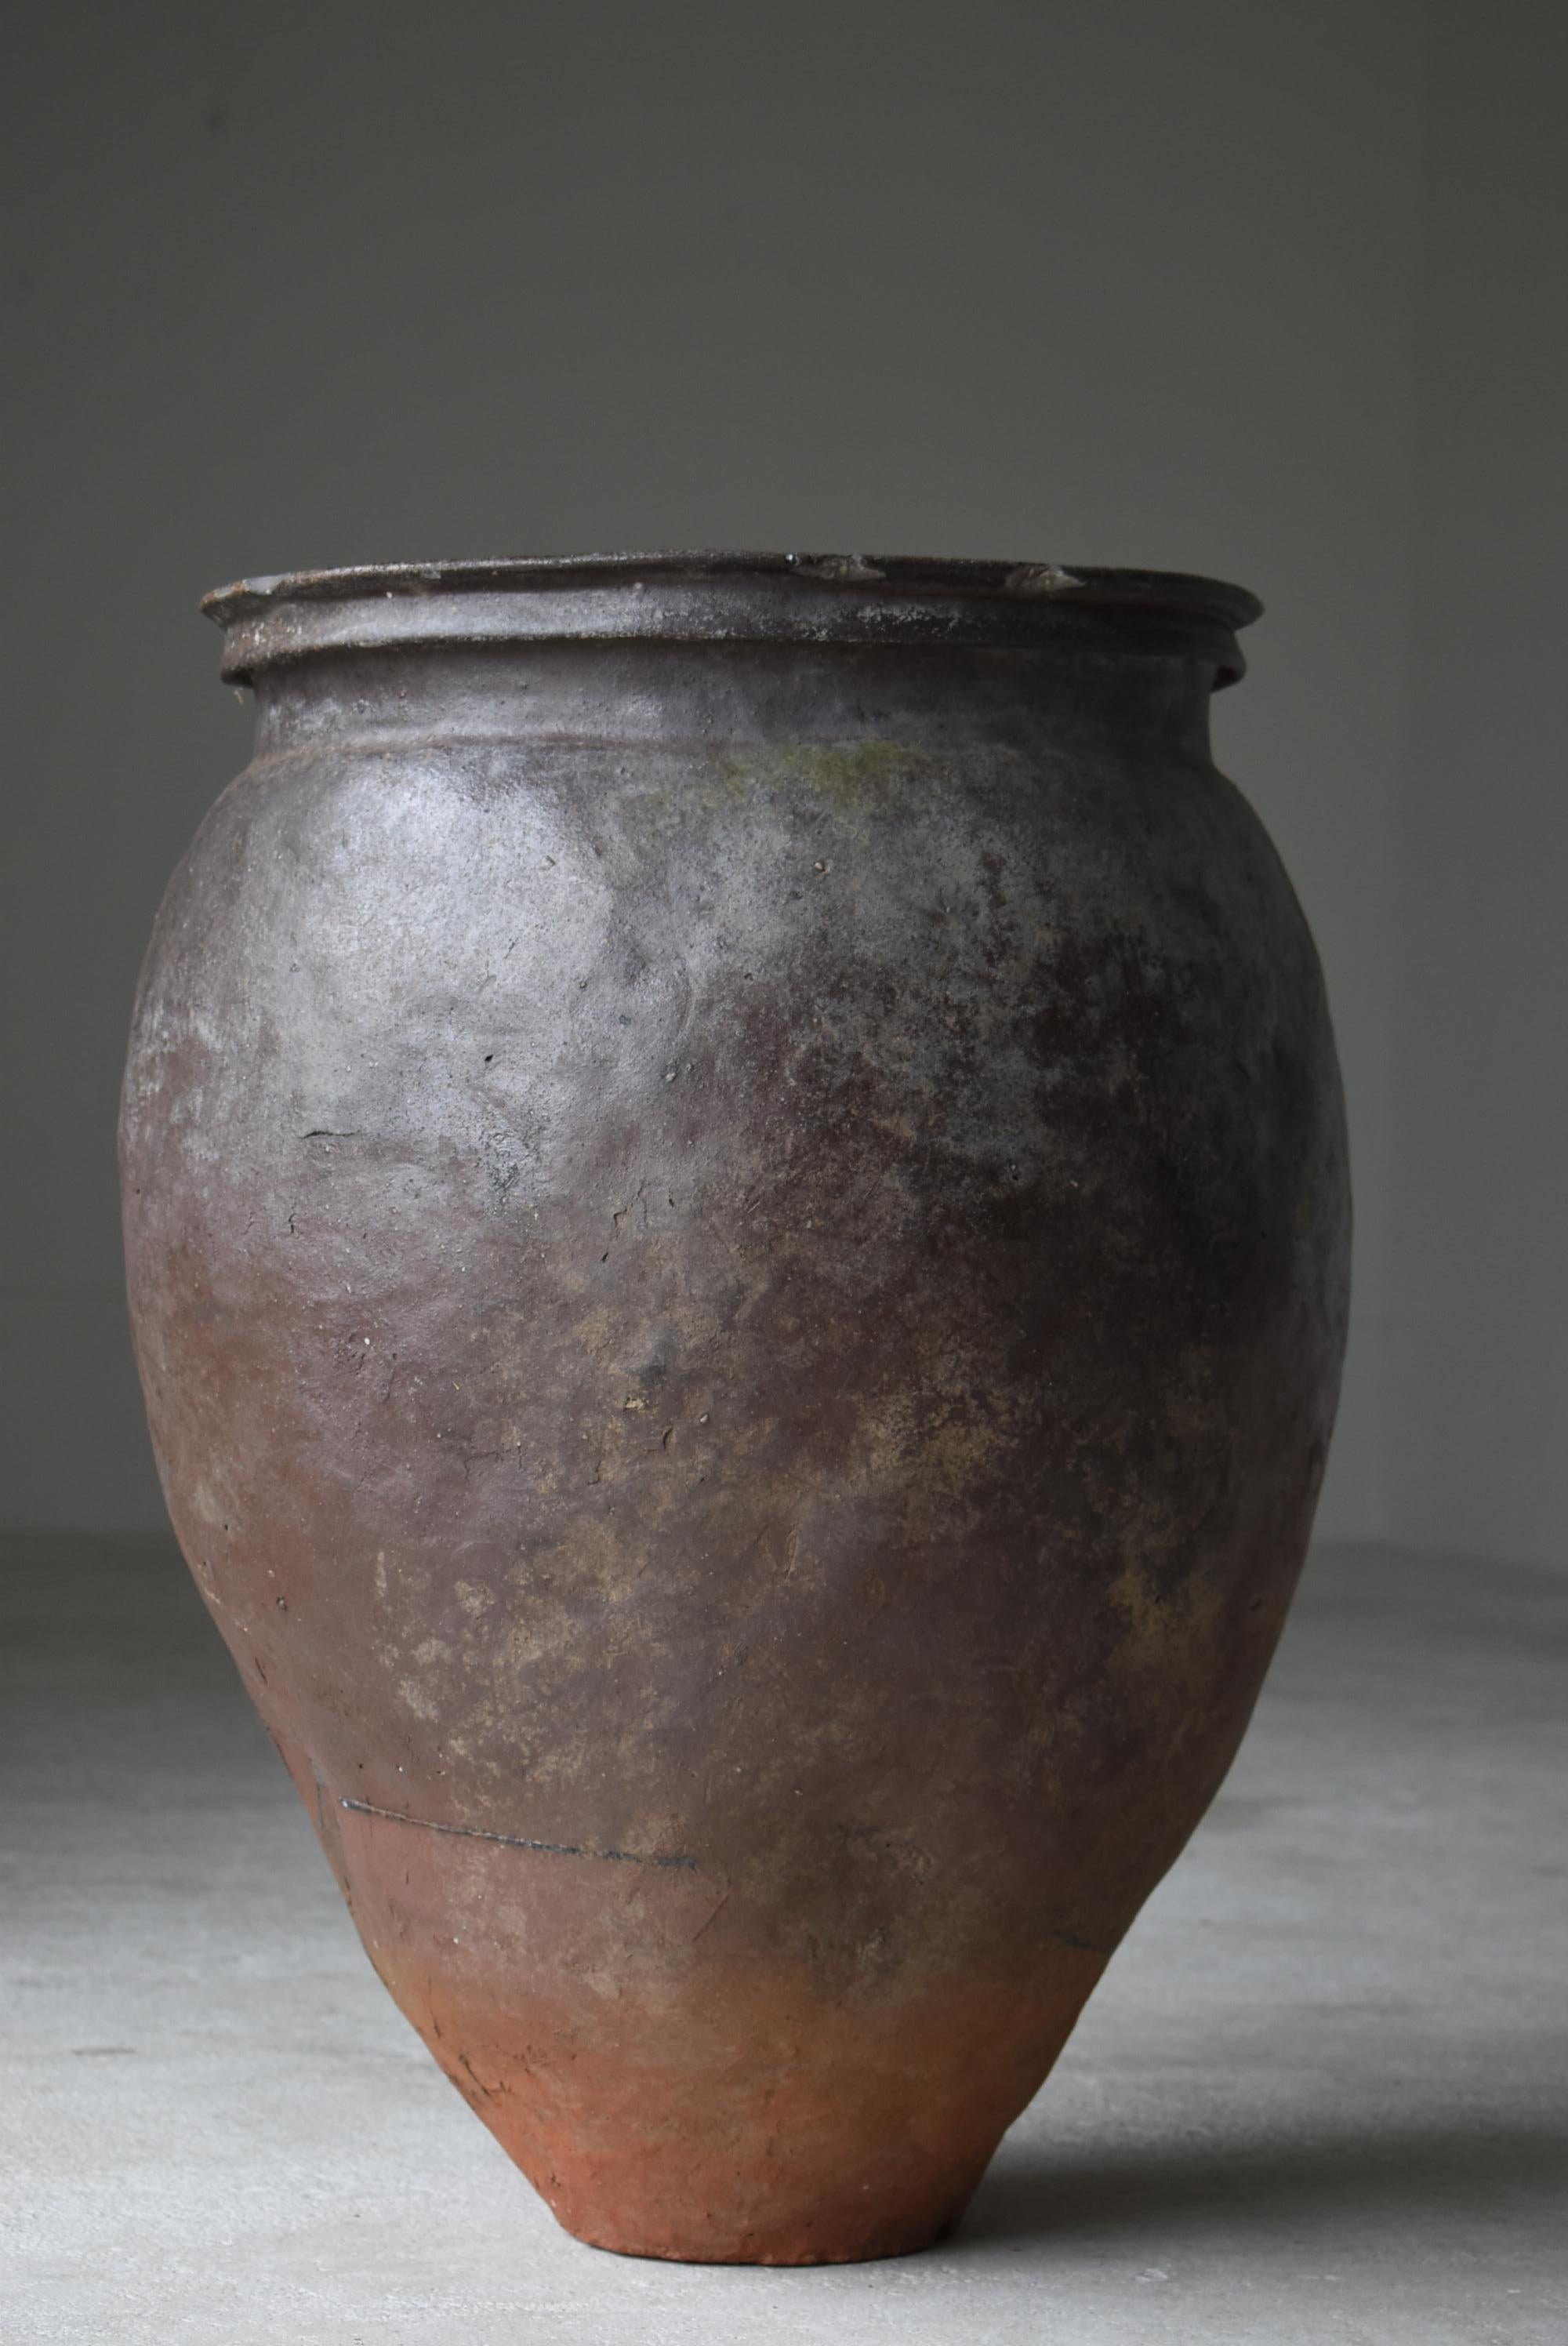 18th Century Japanese Old Pottery 1700s-1800s/Antique Flower Vase Vessel Jar Tsubo Ceramic